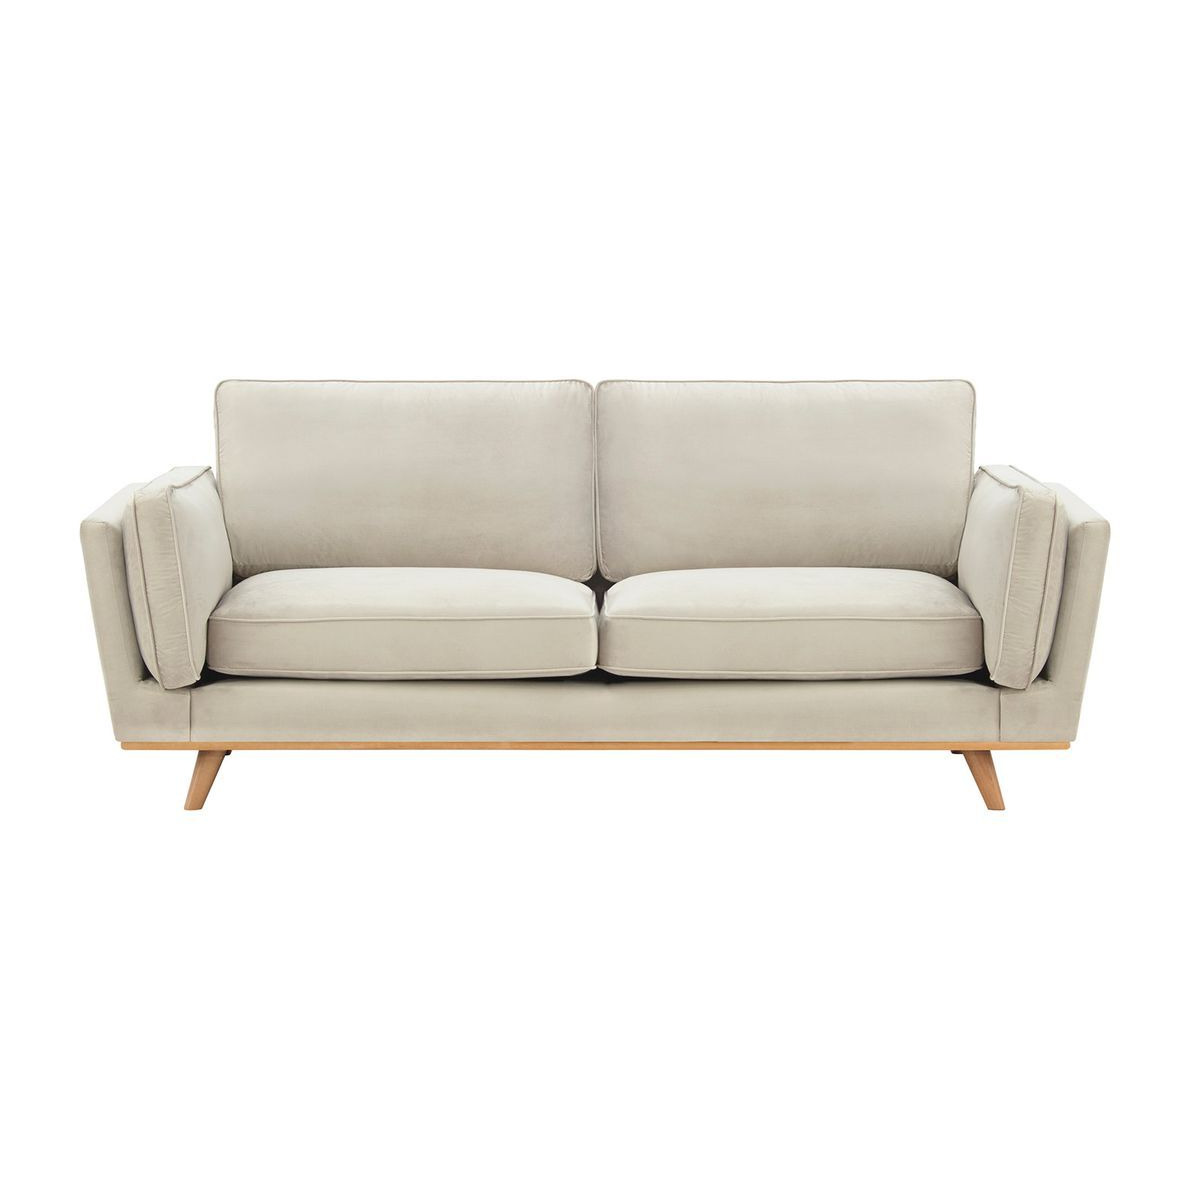 Gabrielle 3 Seater Sofa, light beige, Leg colour: like oak - image 1